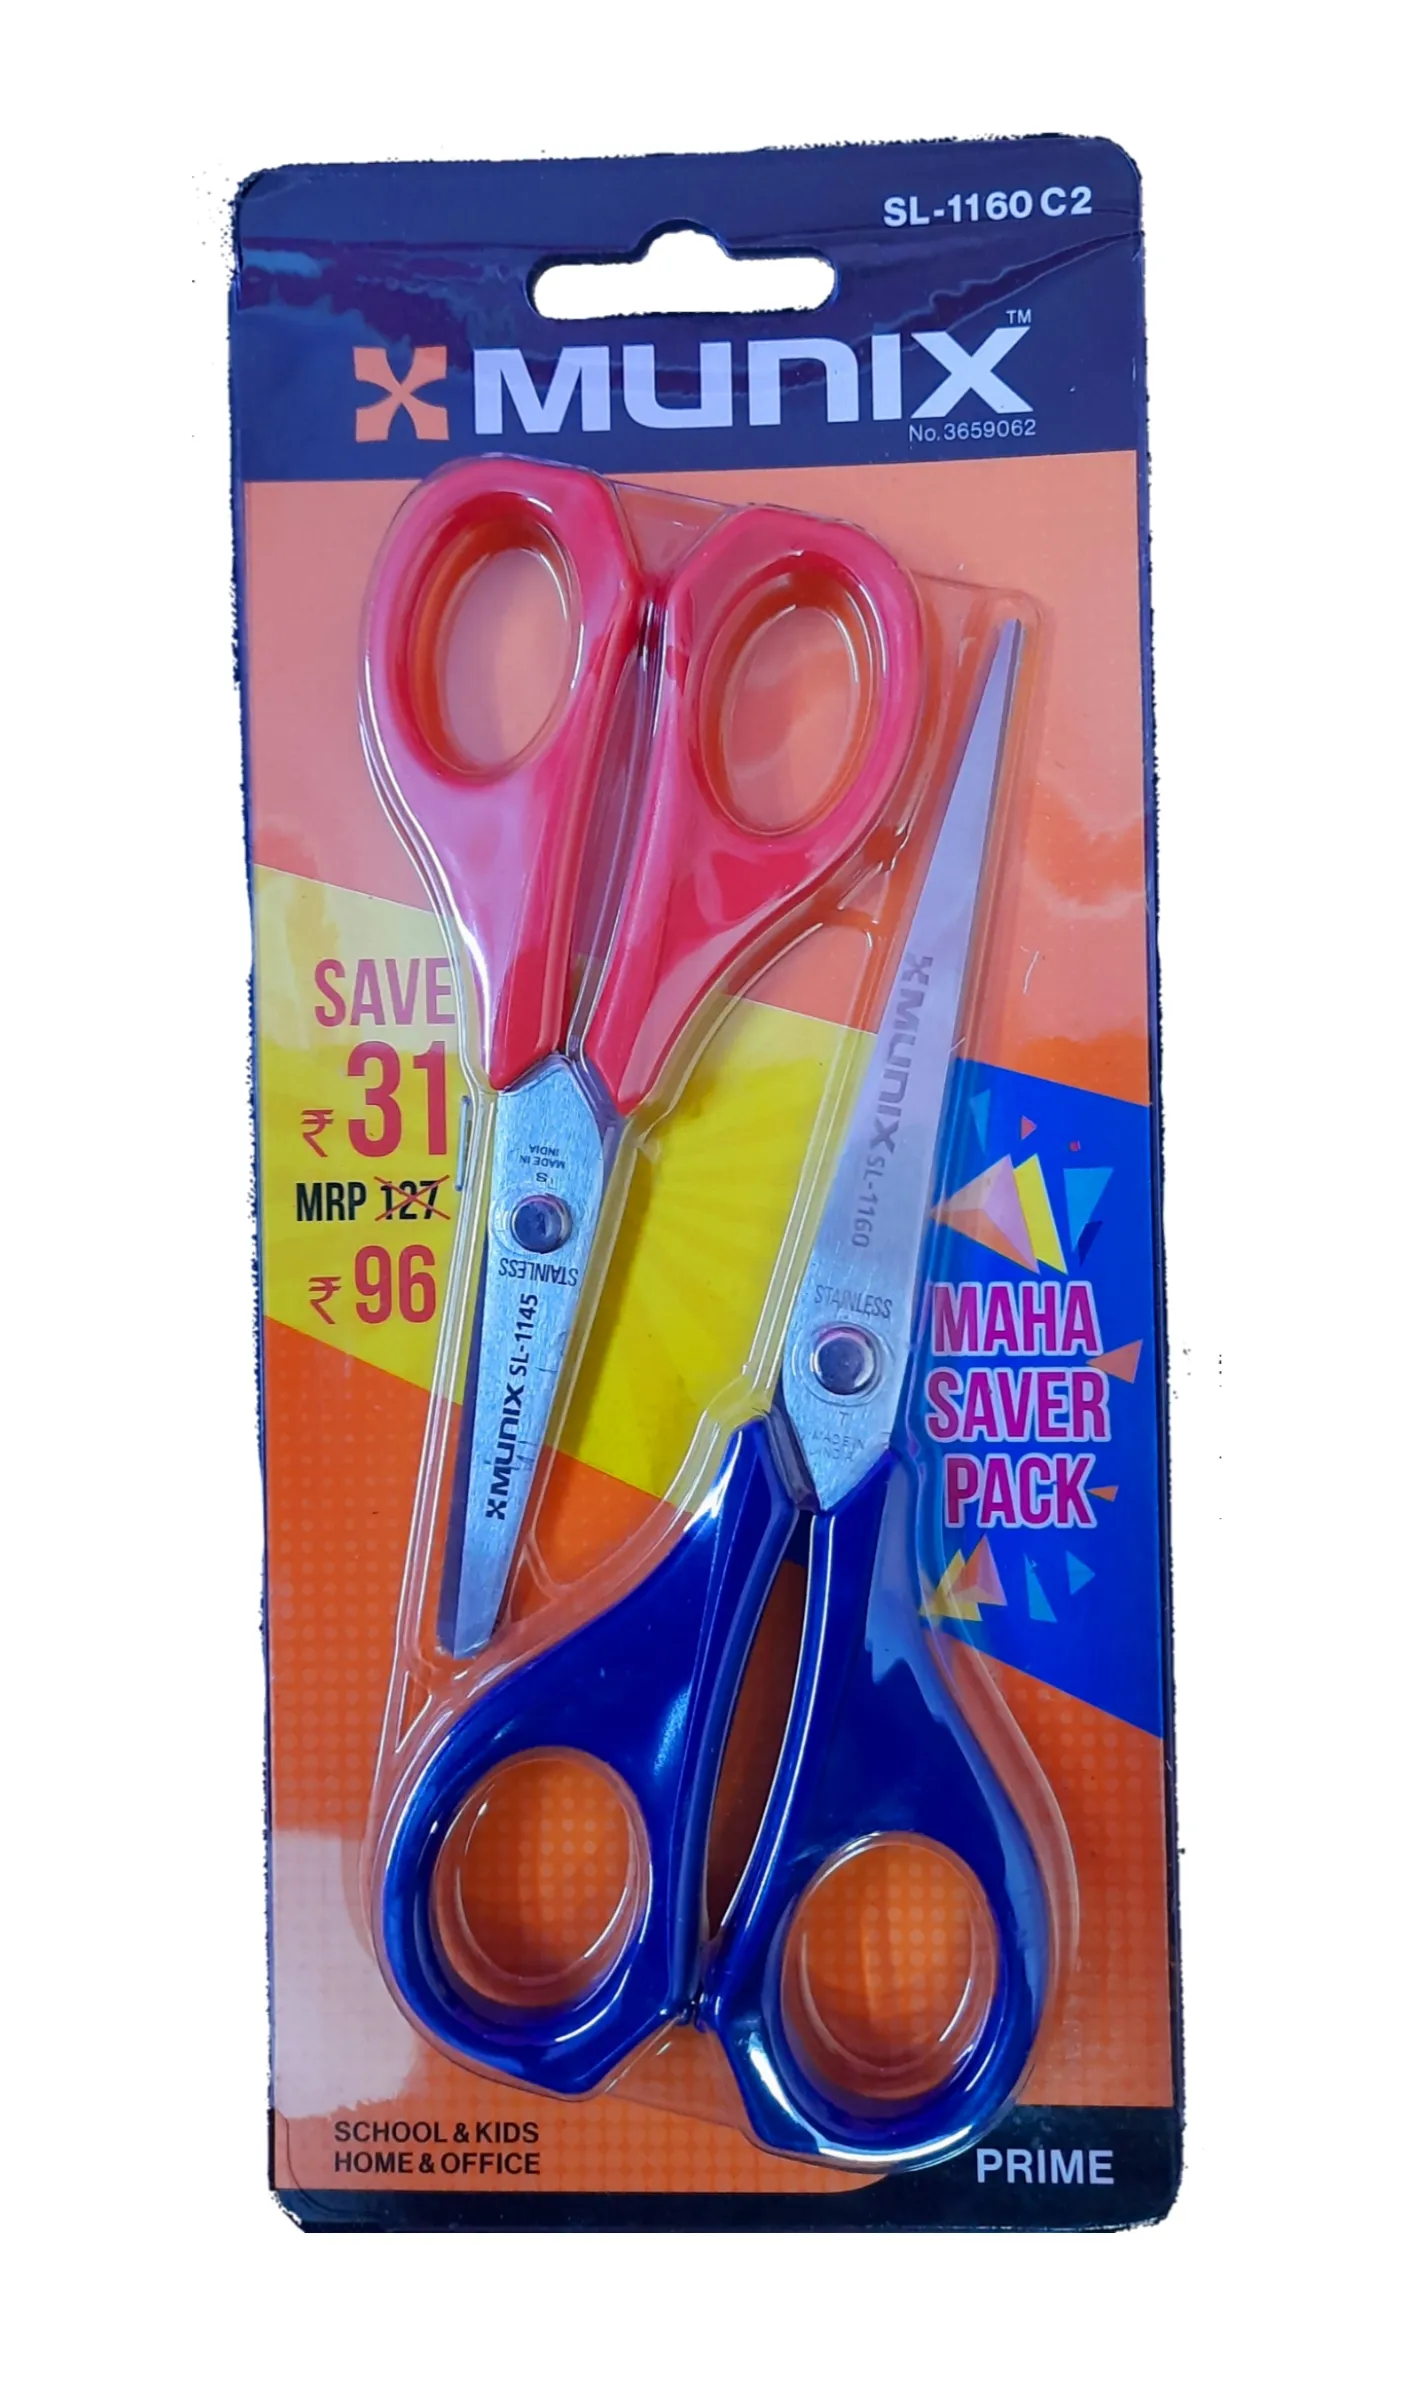 Kangaro Munix Scissors SL-1160 C2 Combo Pack With SL-1145, SL-1160  (School & Kids Home & Office) Pack of 1